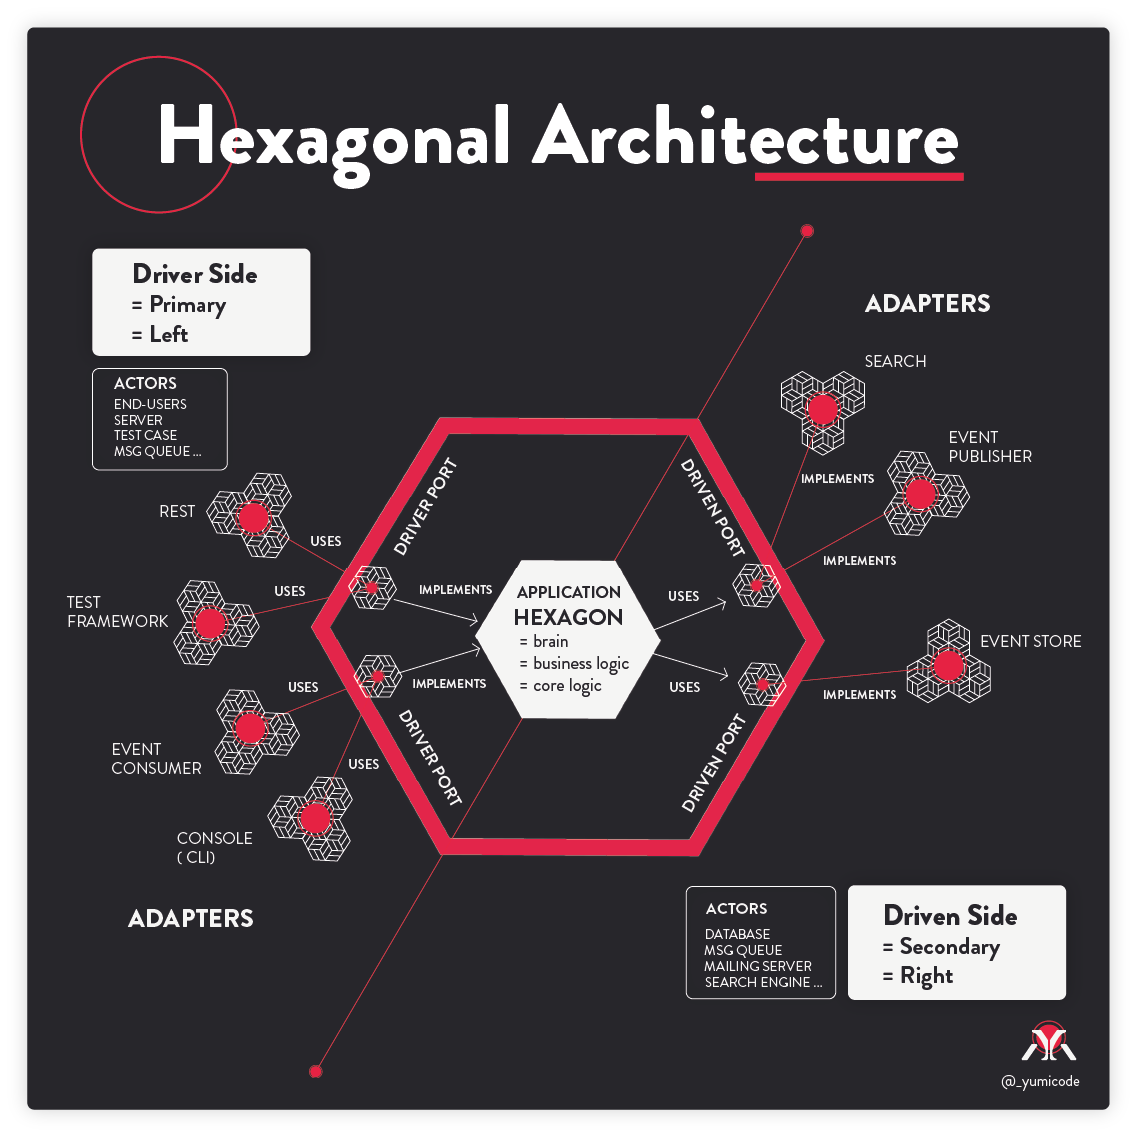 Hexagonal Architecture